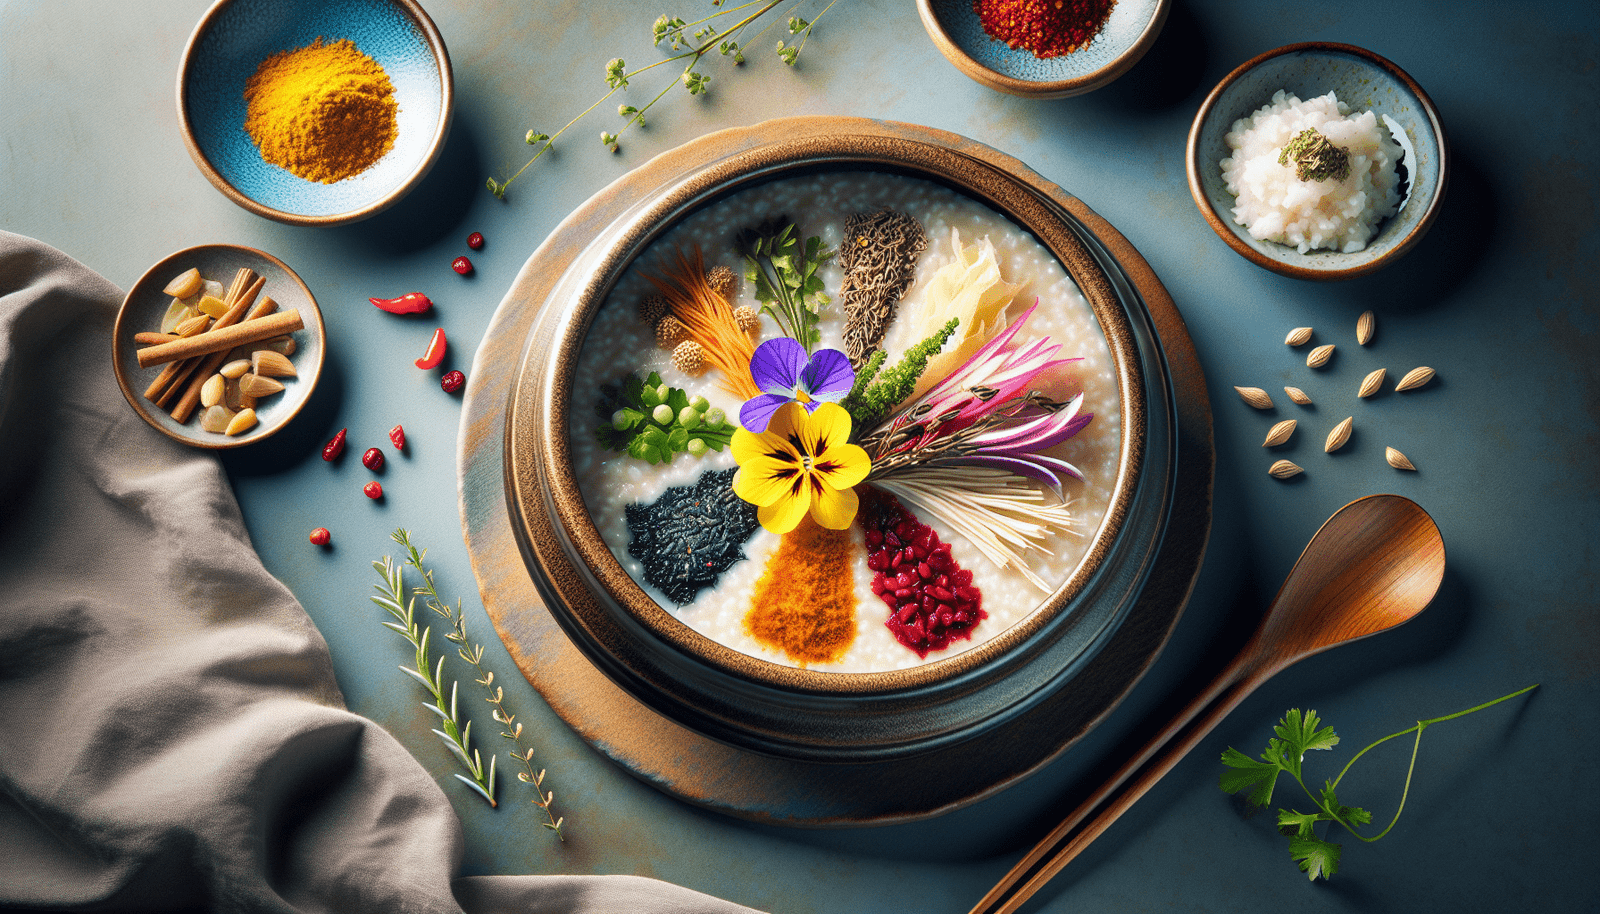 How Do You Add A Modern Flair To Traditional Korean Porridges (juk)?